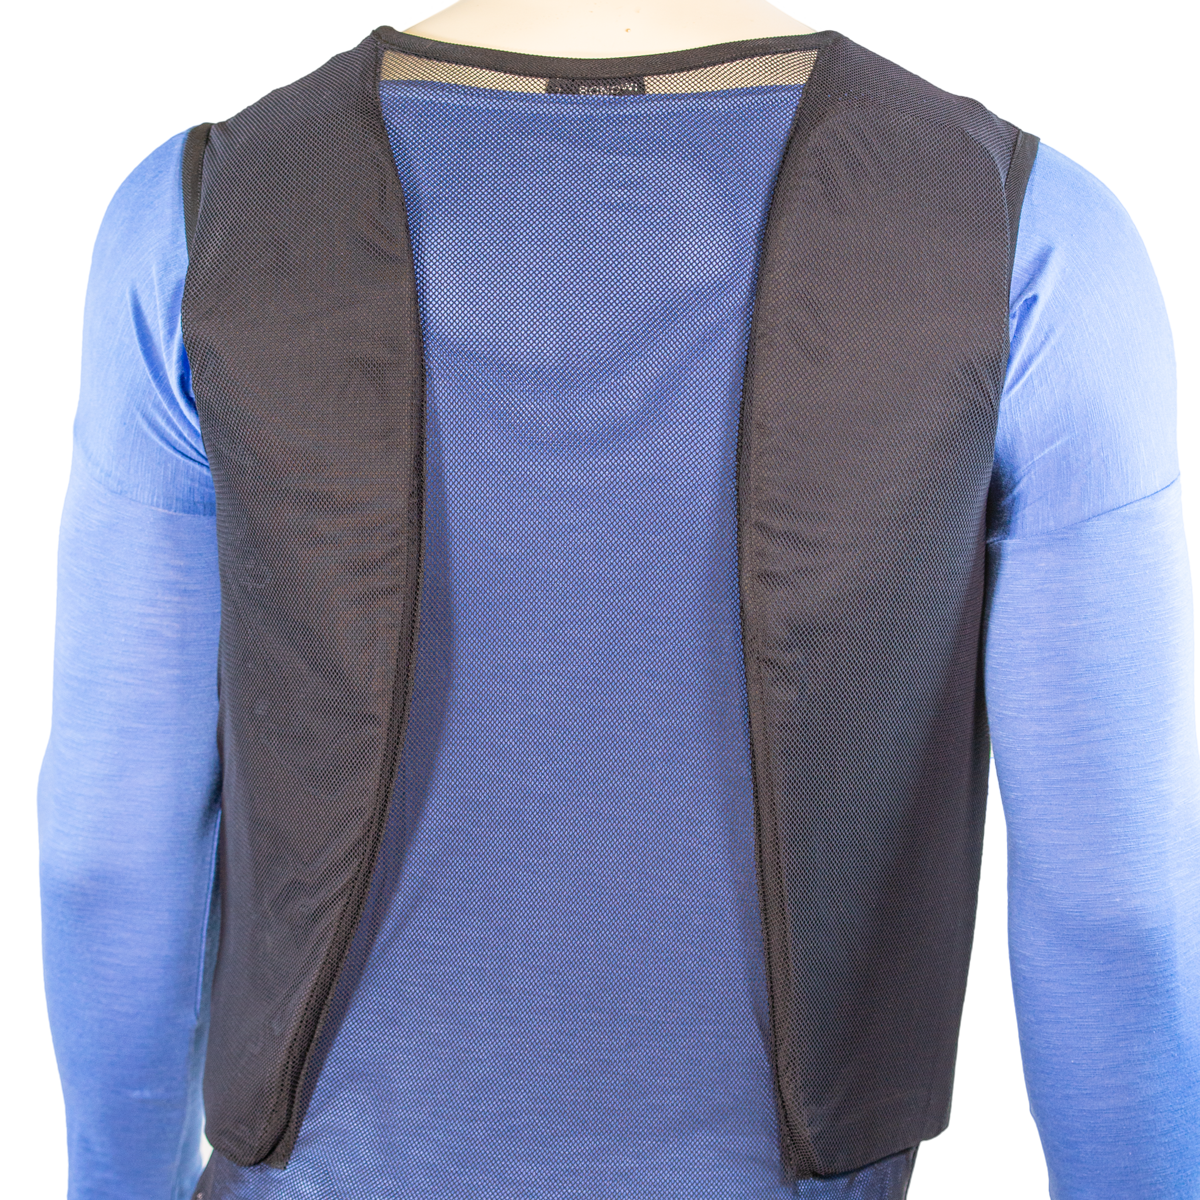 Bonowi flank protection vest back